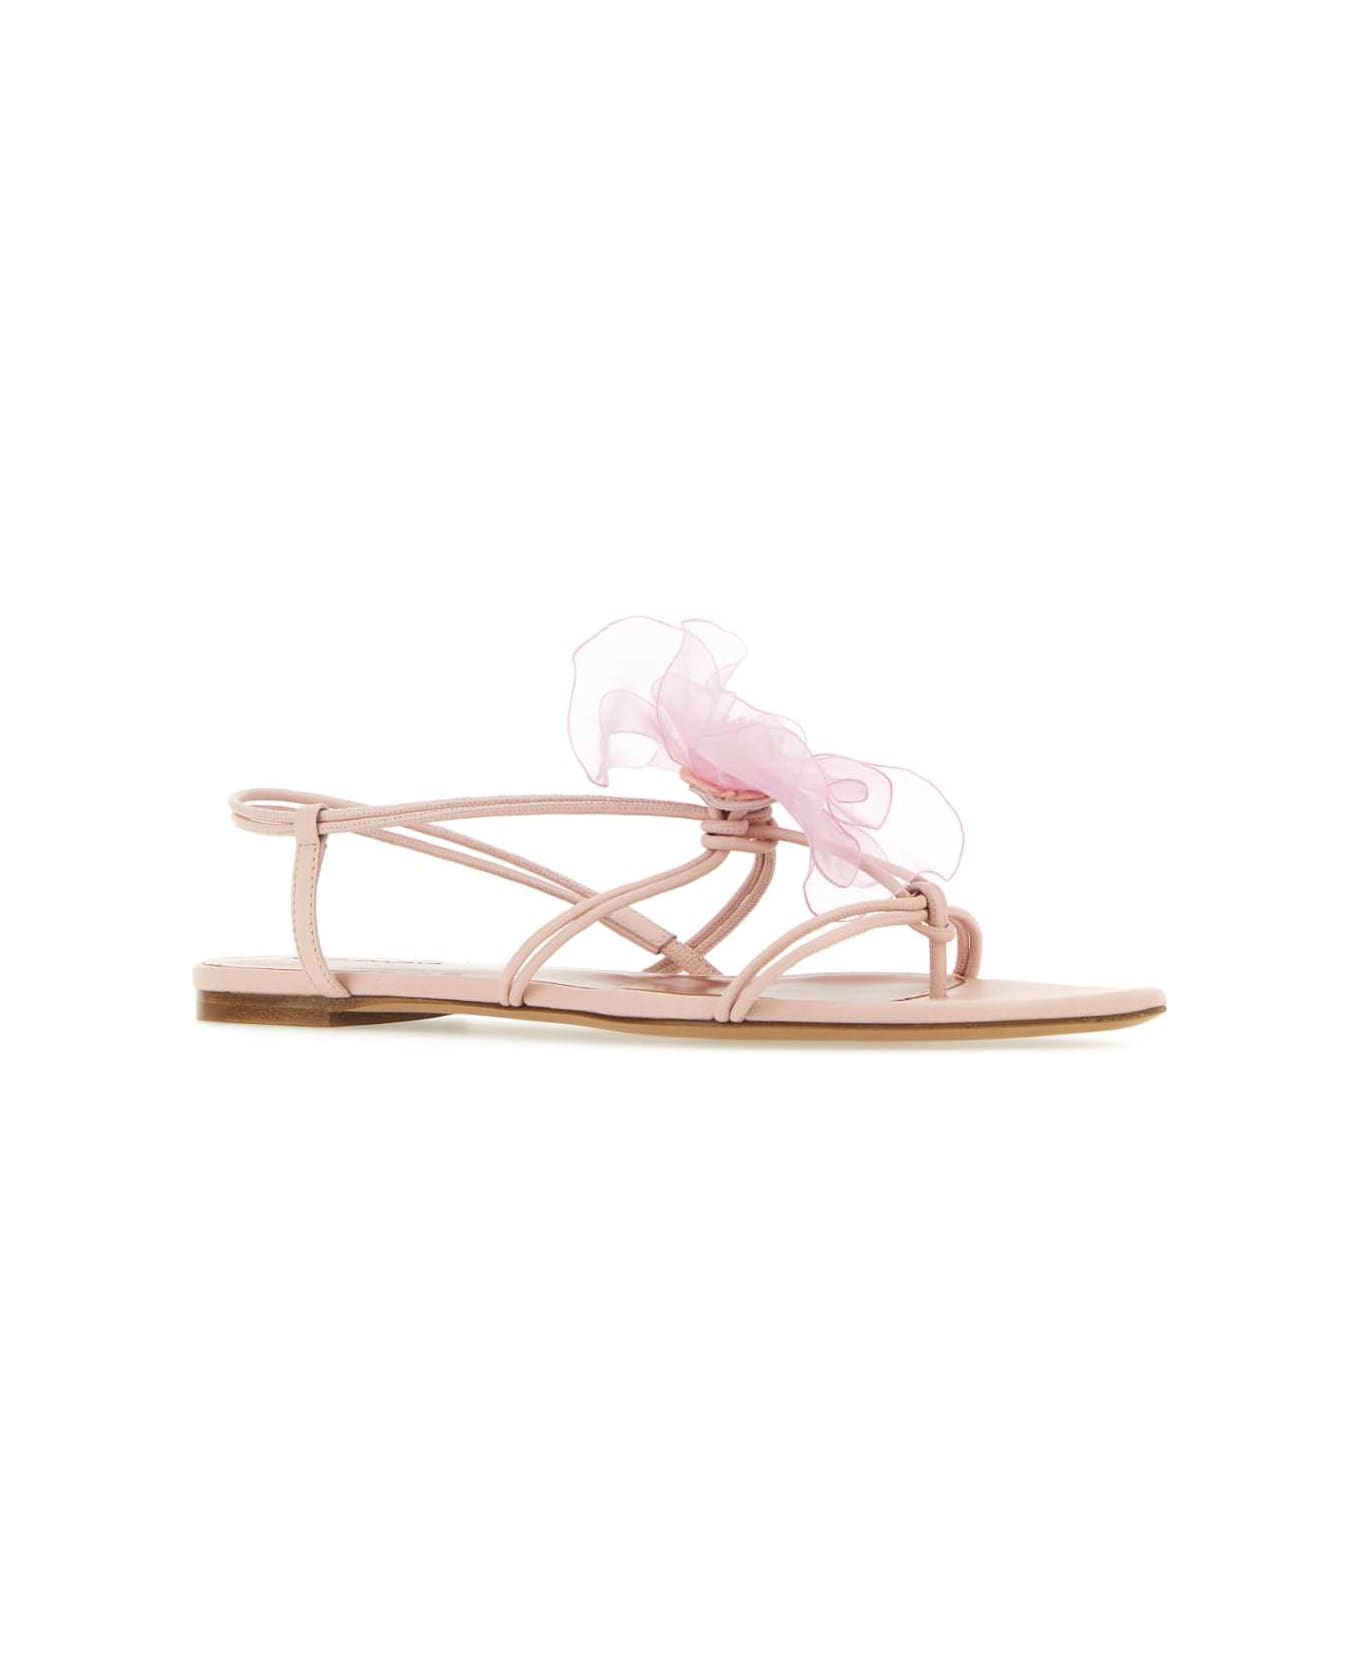 Nensi Dojaka Pastel Pink Nappa Leather Thong Sandals - Pink